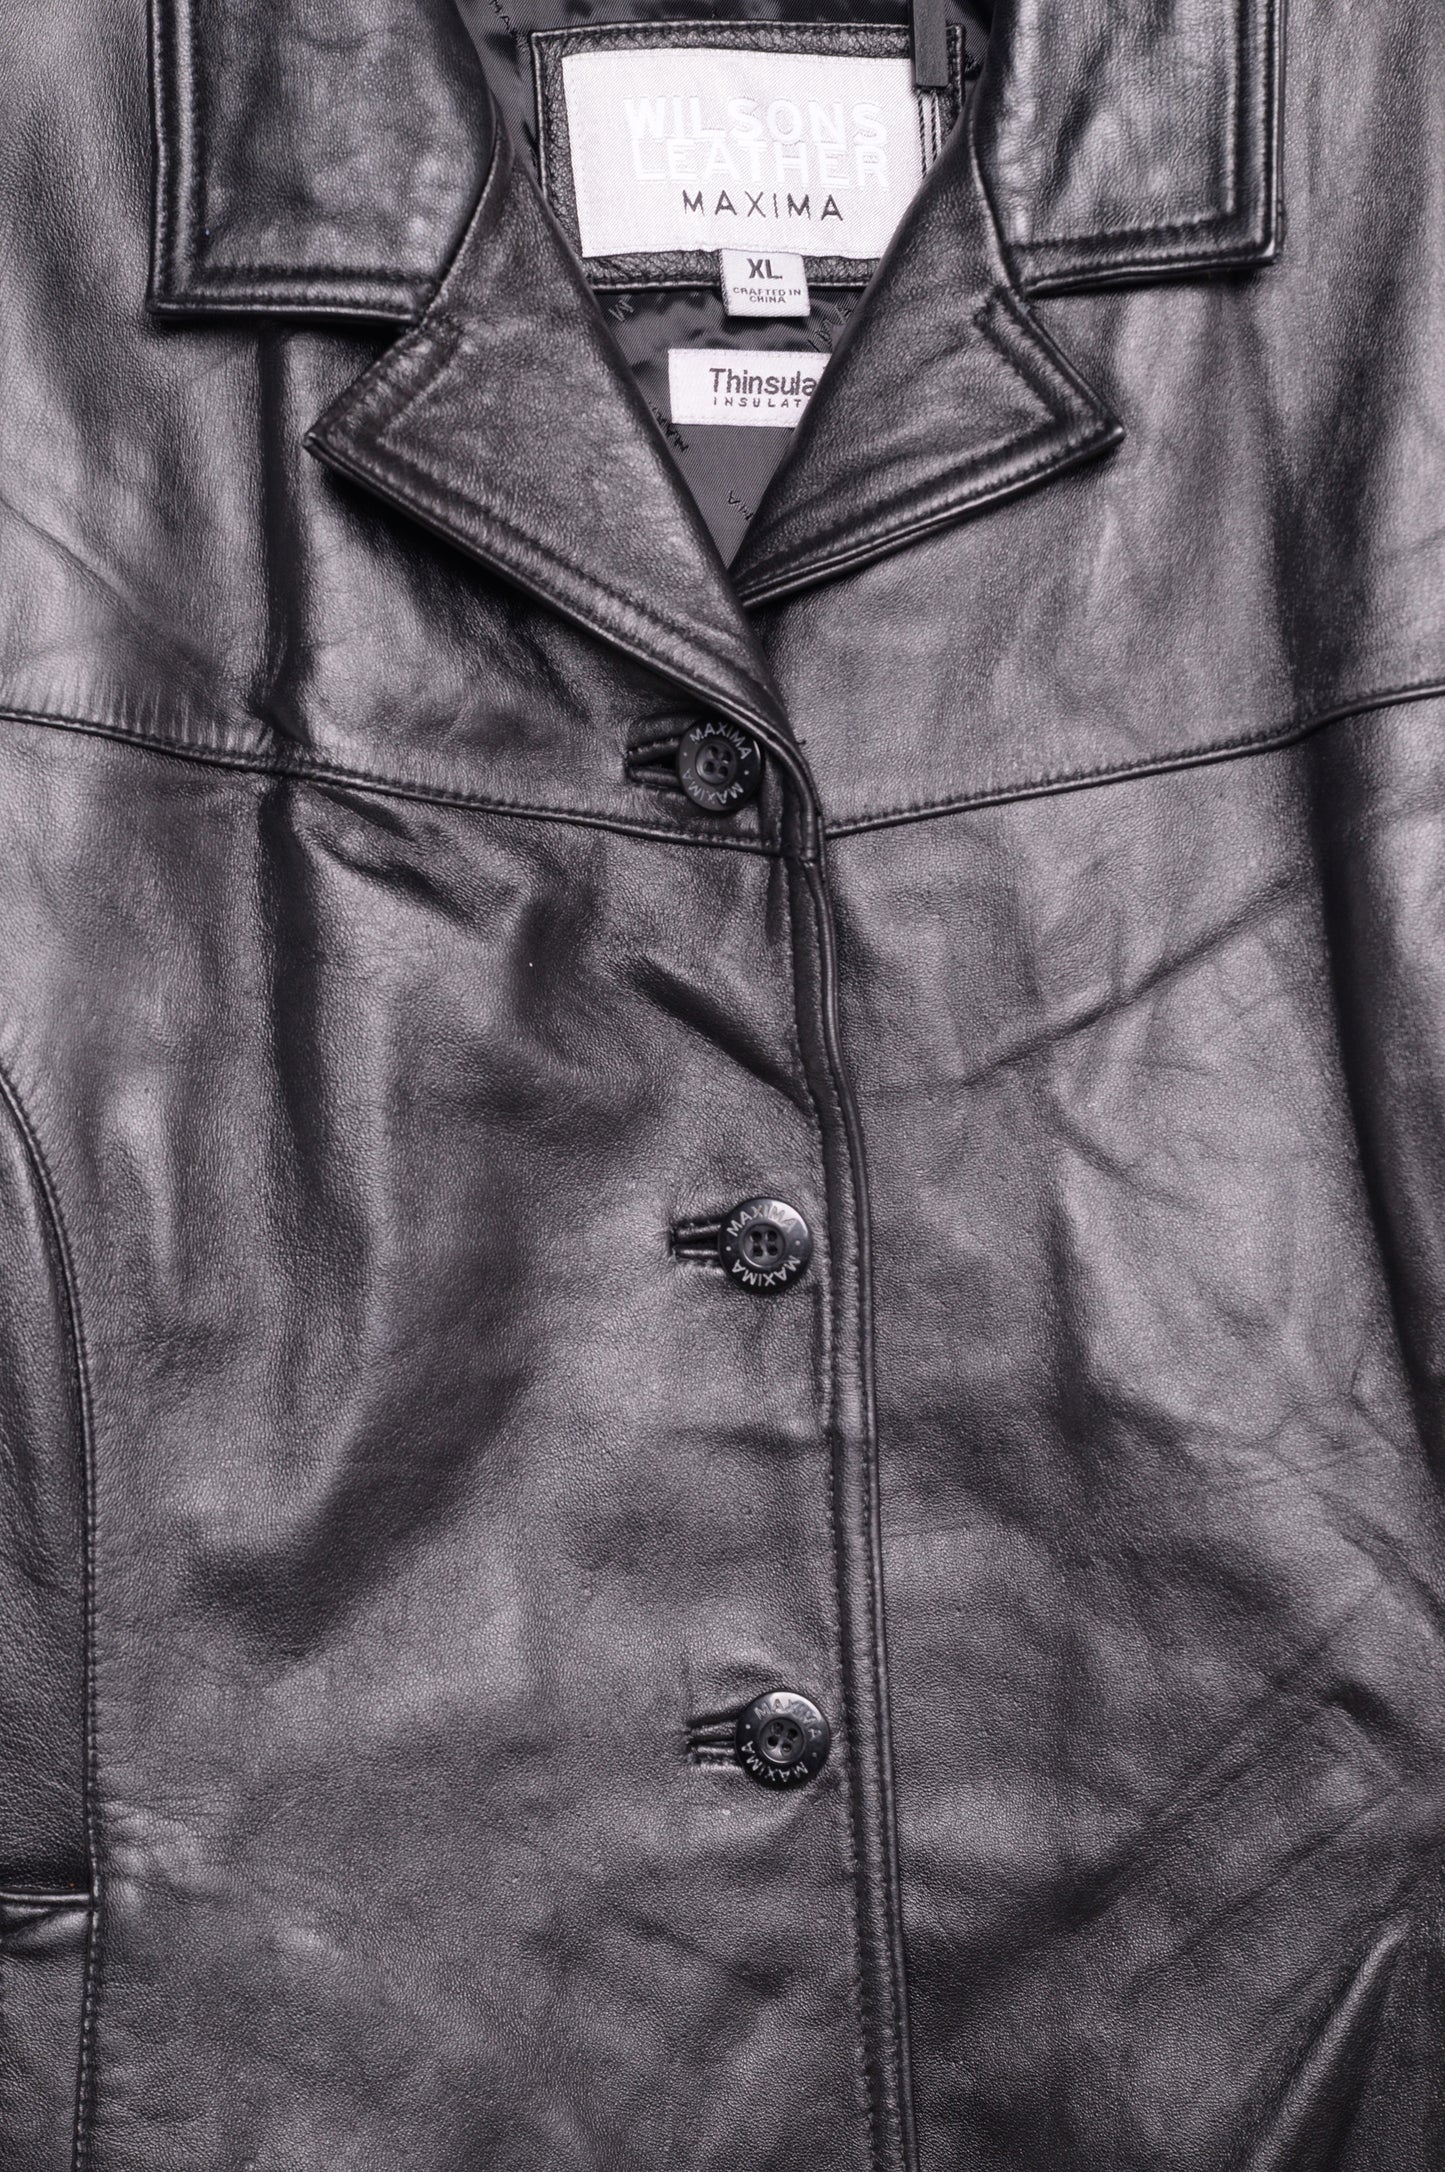 1990s Wilson's Leather Jacket